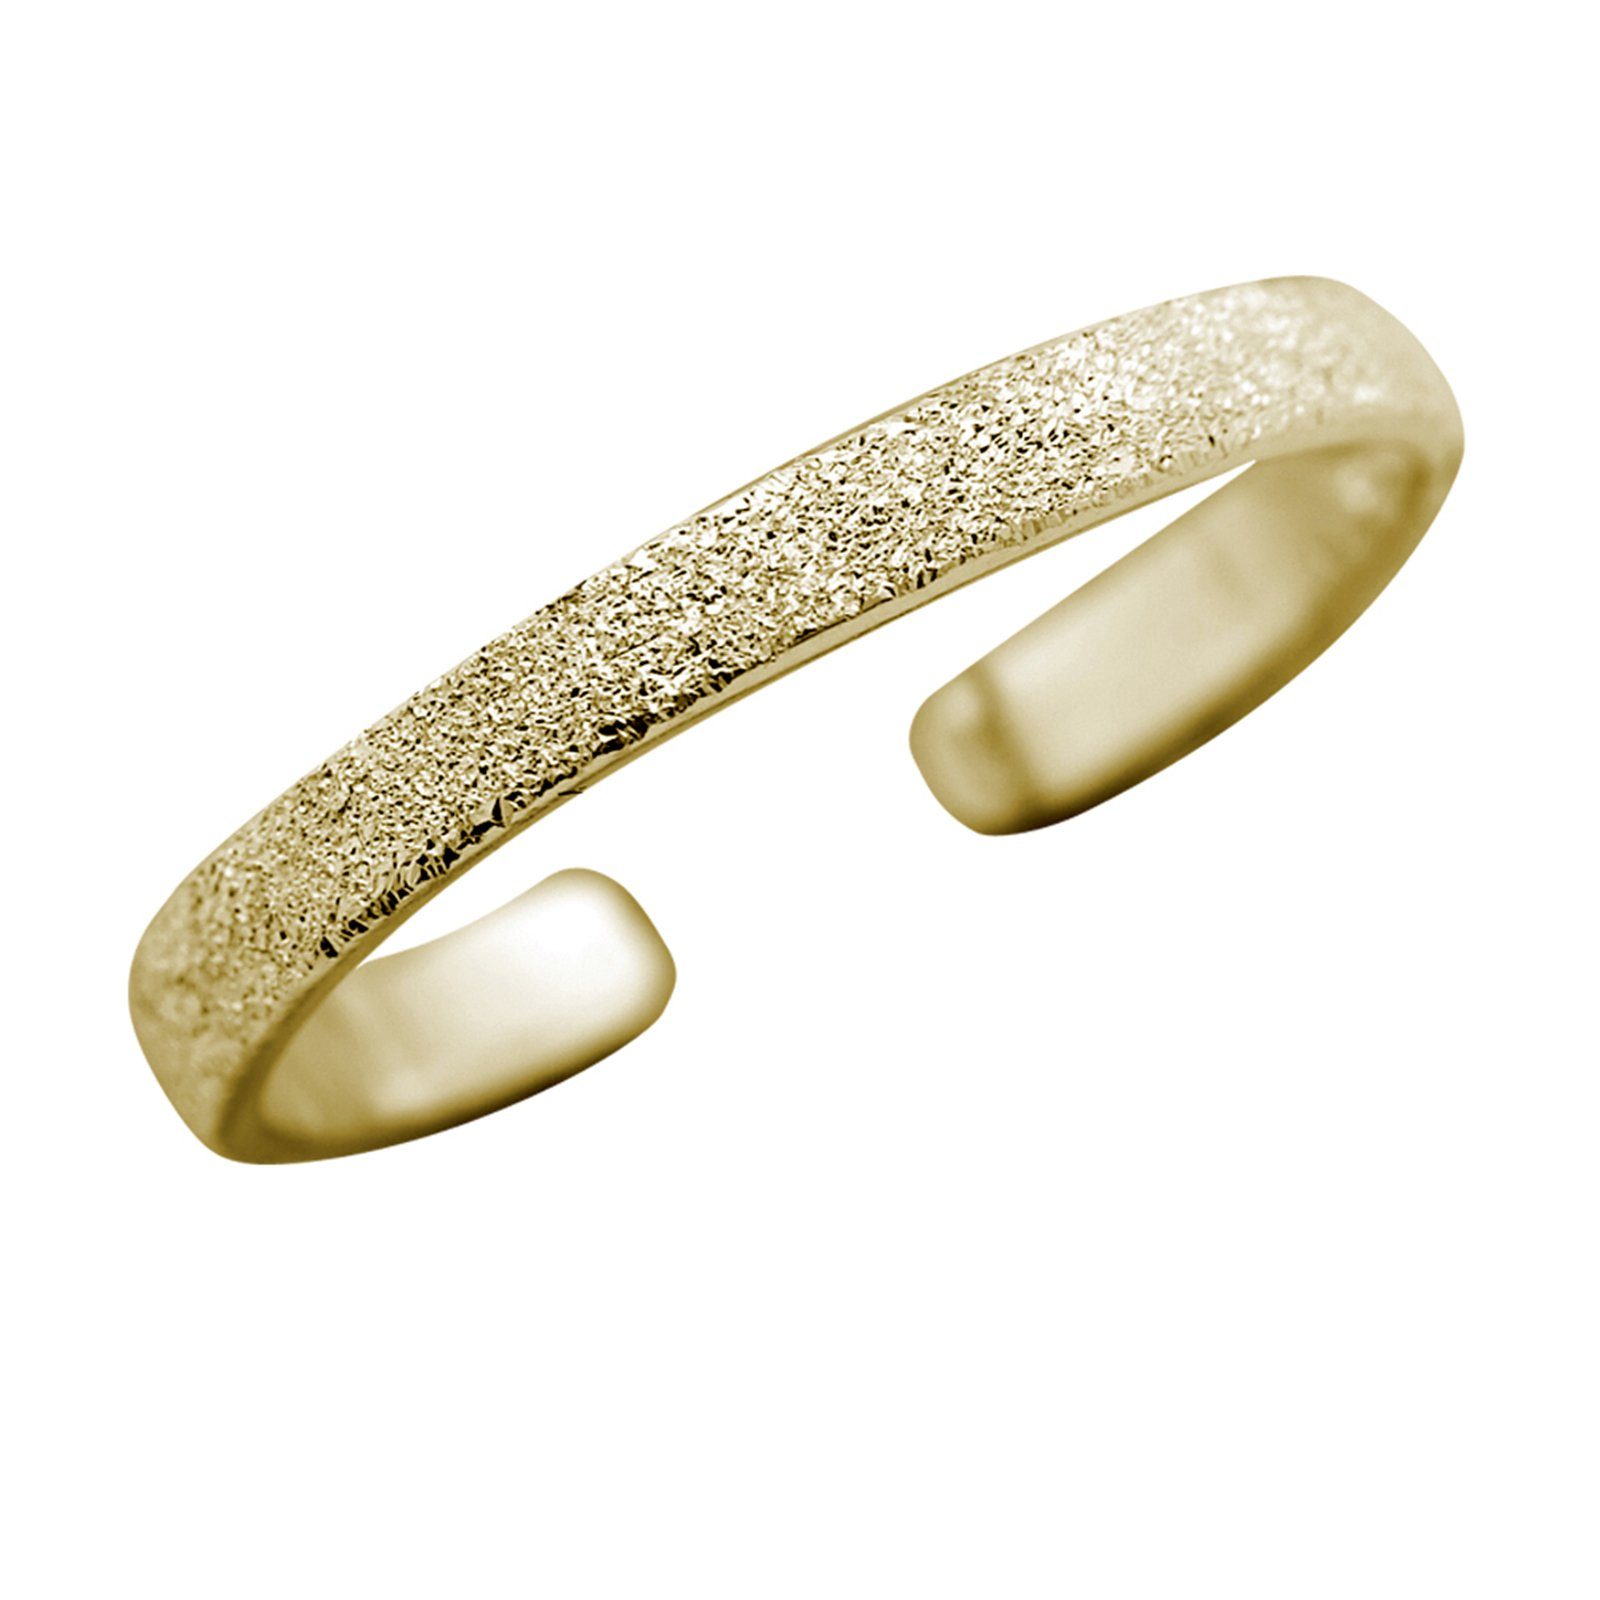 schmuck23 Zehenring »Zeh Ring schmal sandgestralt 925 Silber gold«, Zehring  Fuss Ring Toering online kaufen | OTTO